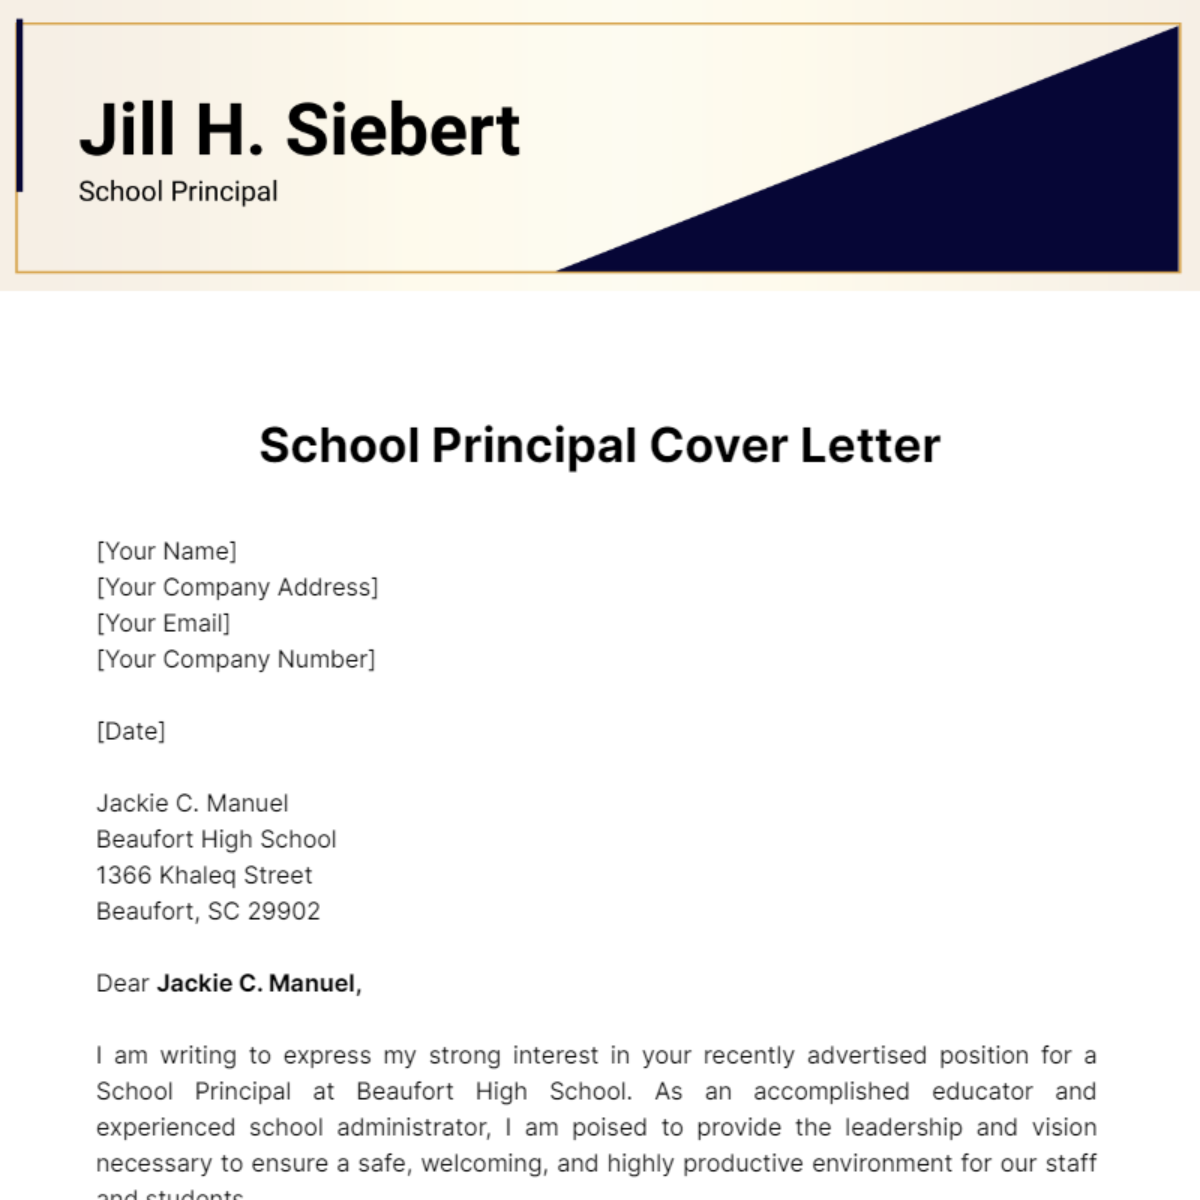 School Principal Cover Letter Template